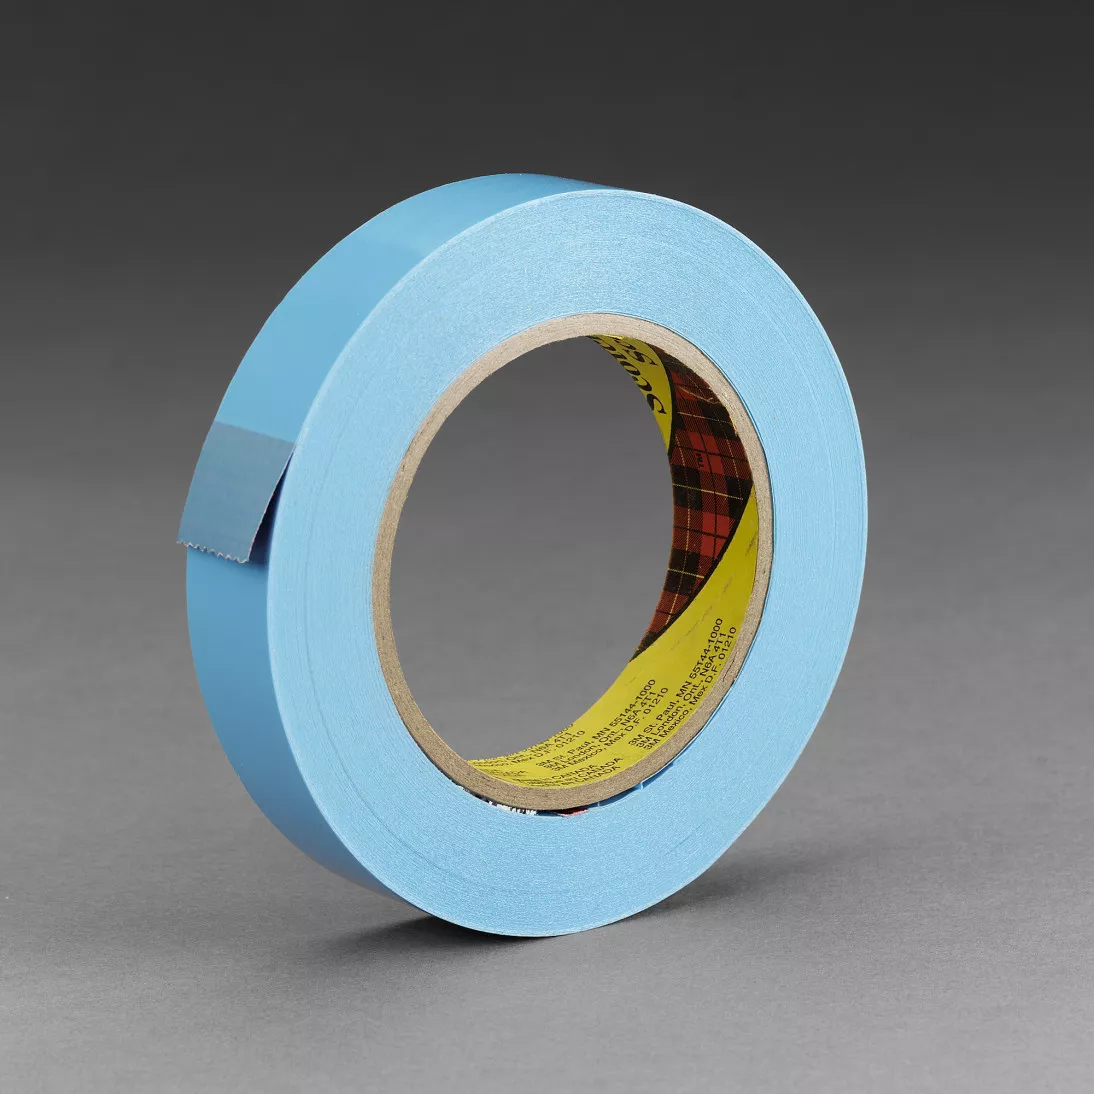 Scotch® Strapping Tape 8898, Blue, 288 mm x 330 m, 4.6 mil, 1 roll per
case